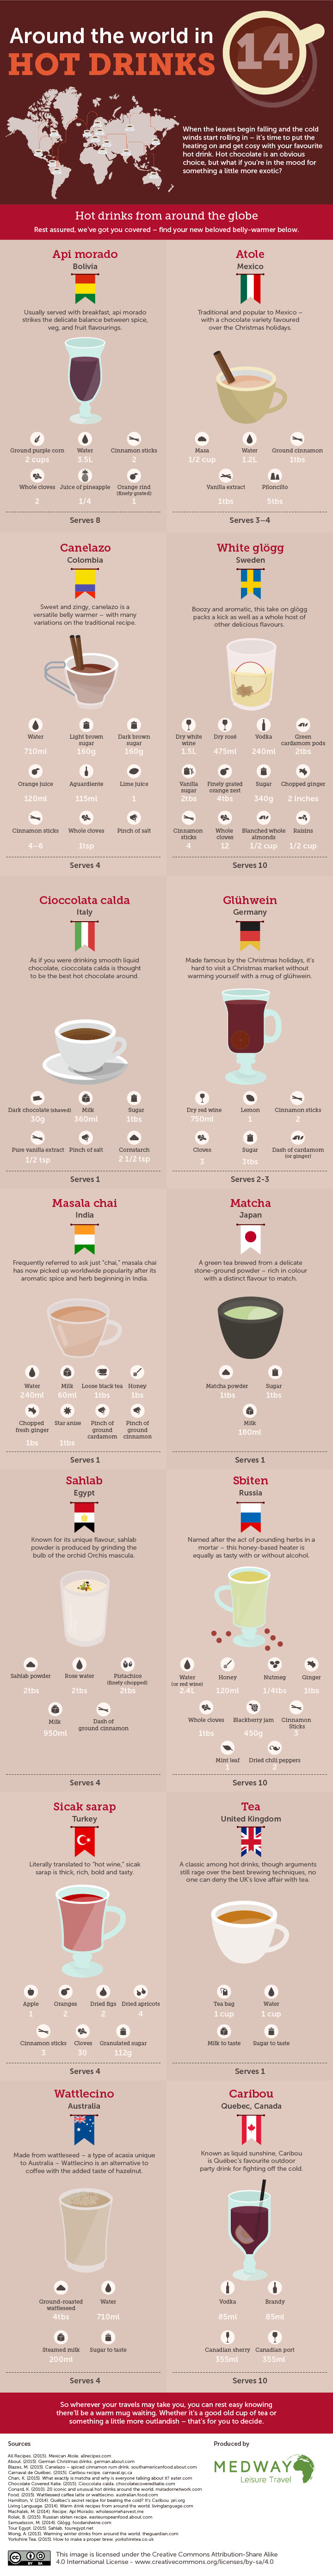 Around the World in 14 Hot Drinks